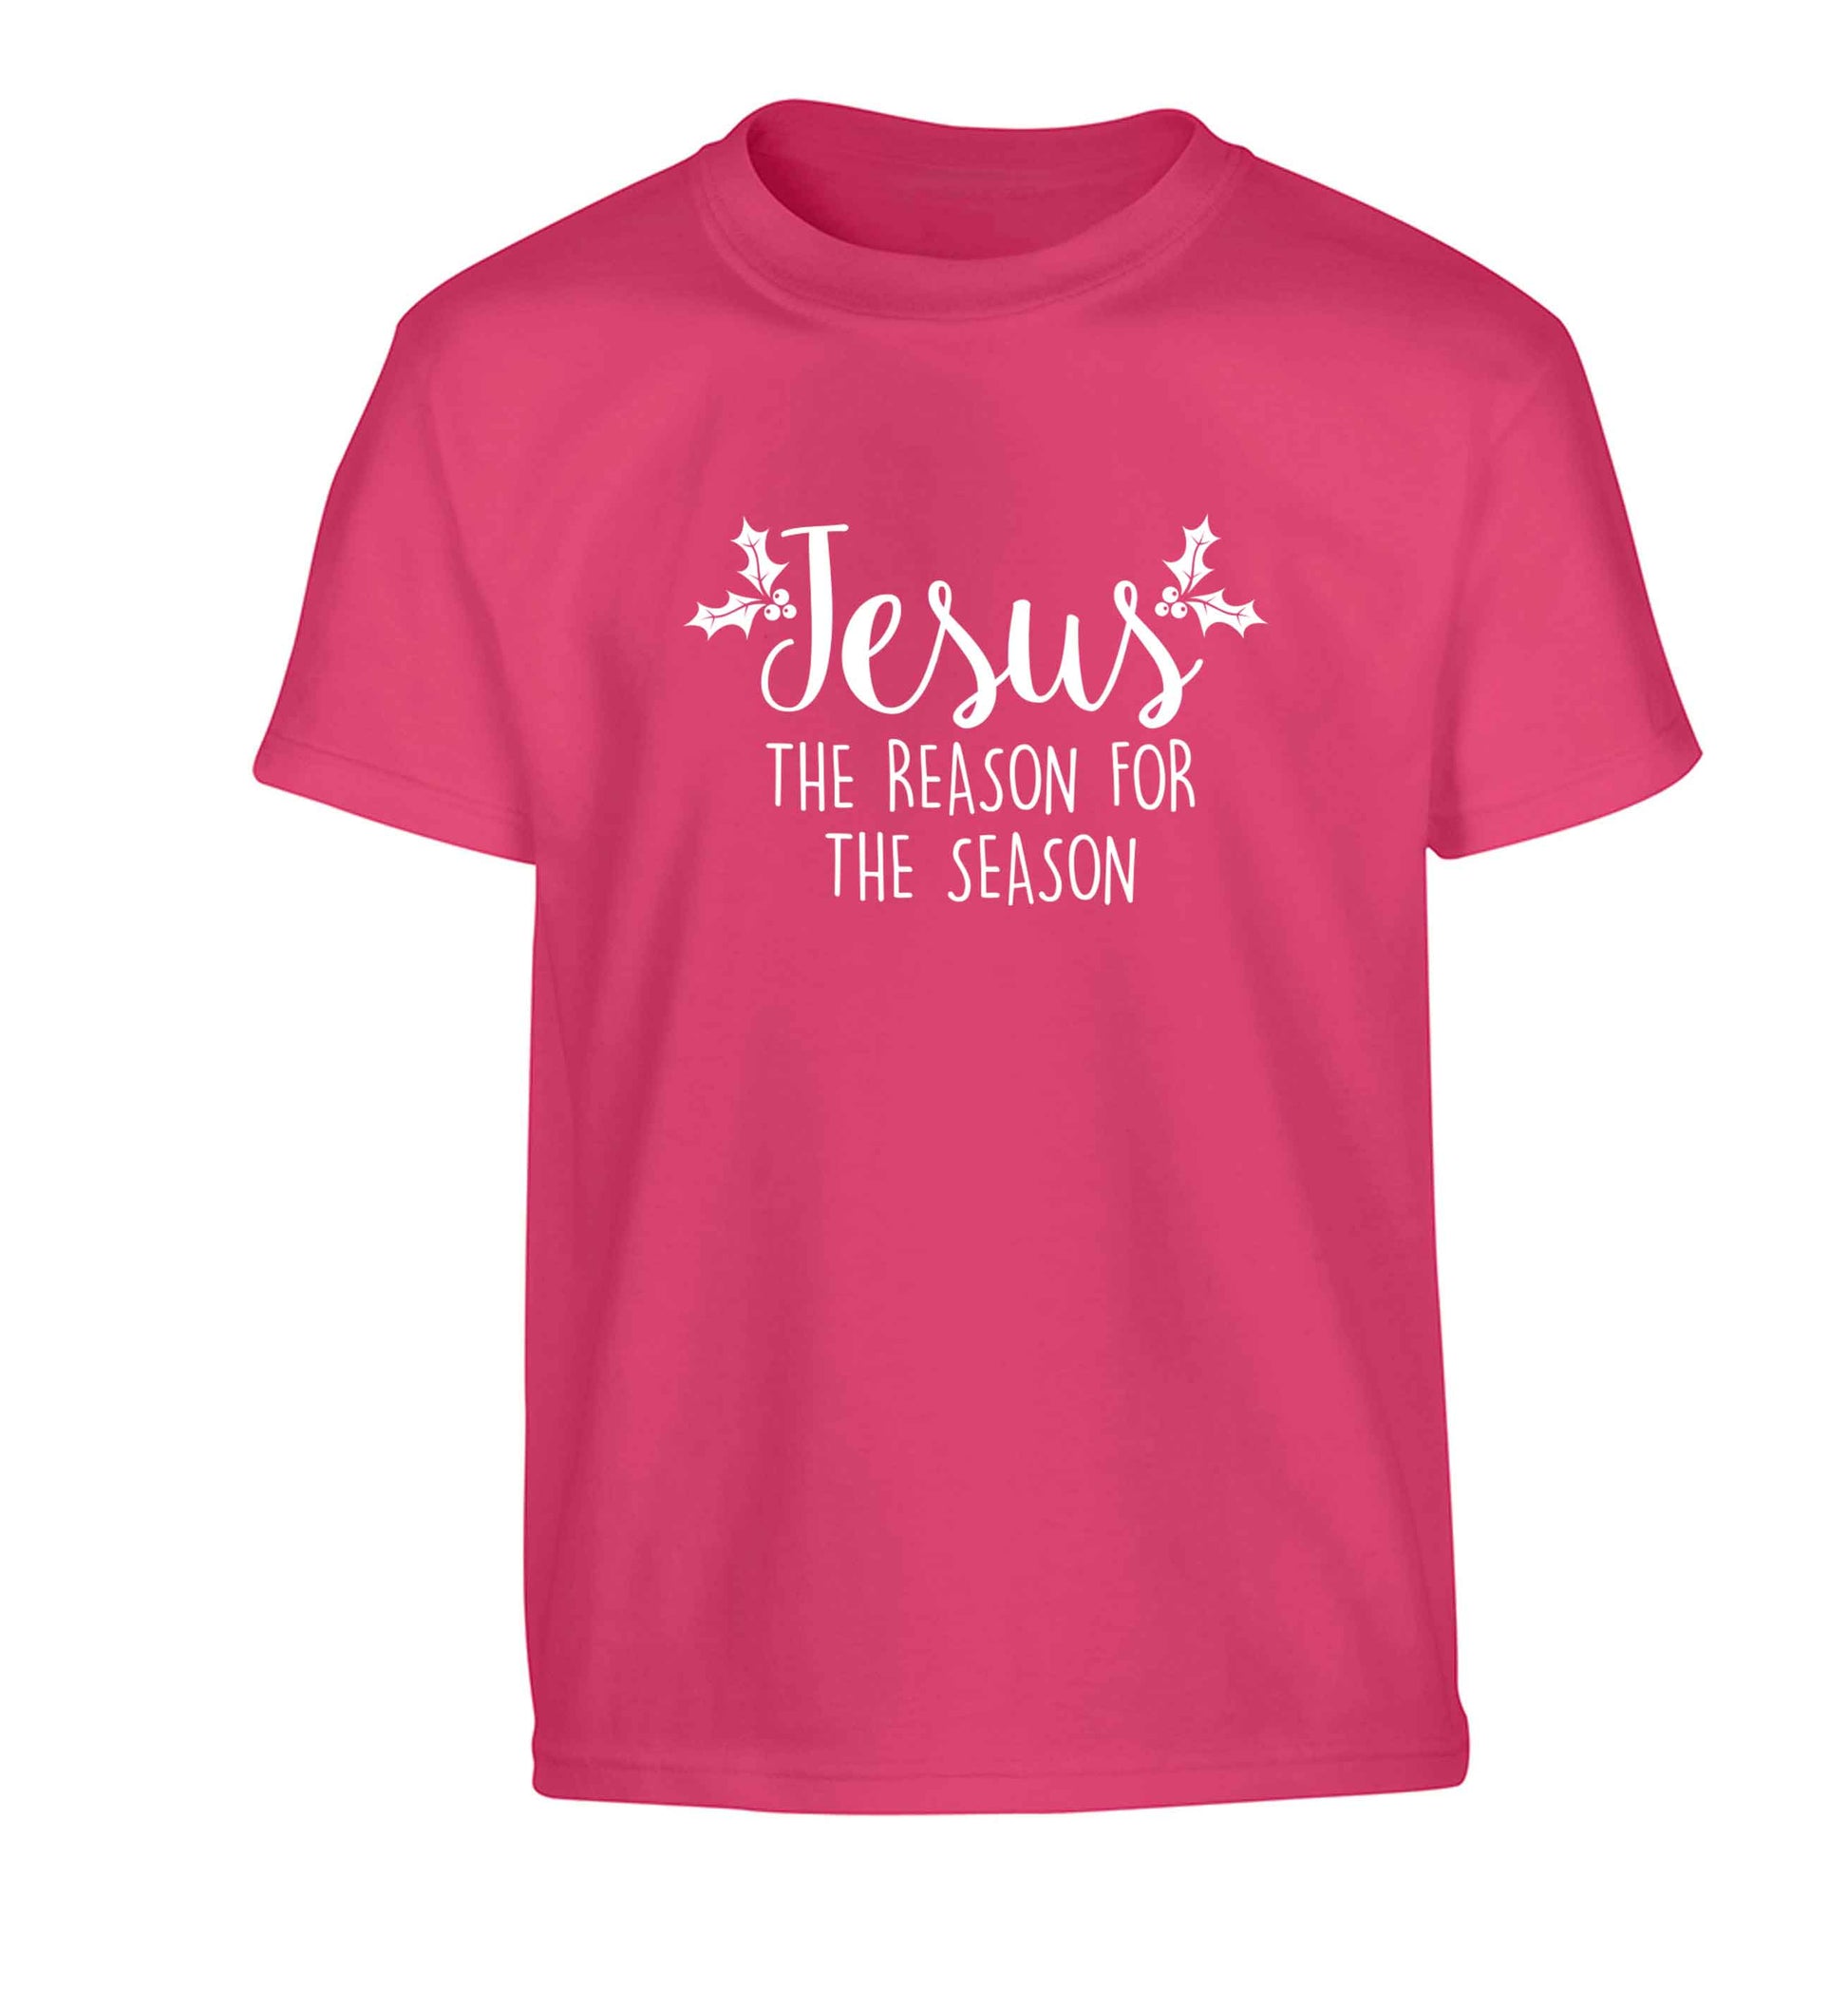 Jesus the reason for the season Children's pink Tshirt 12-13 Years